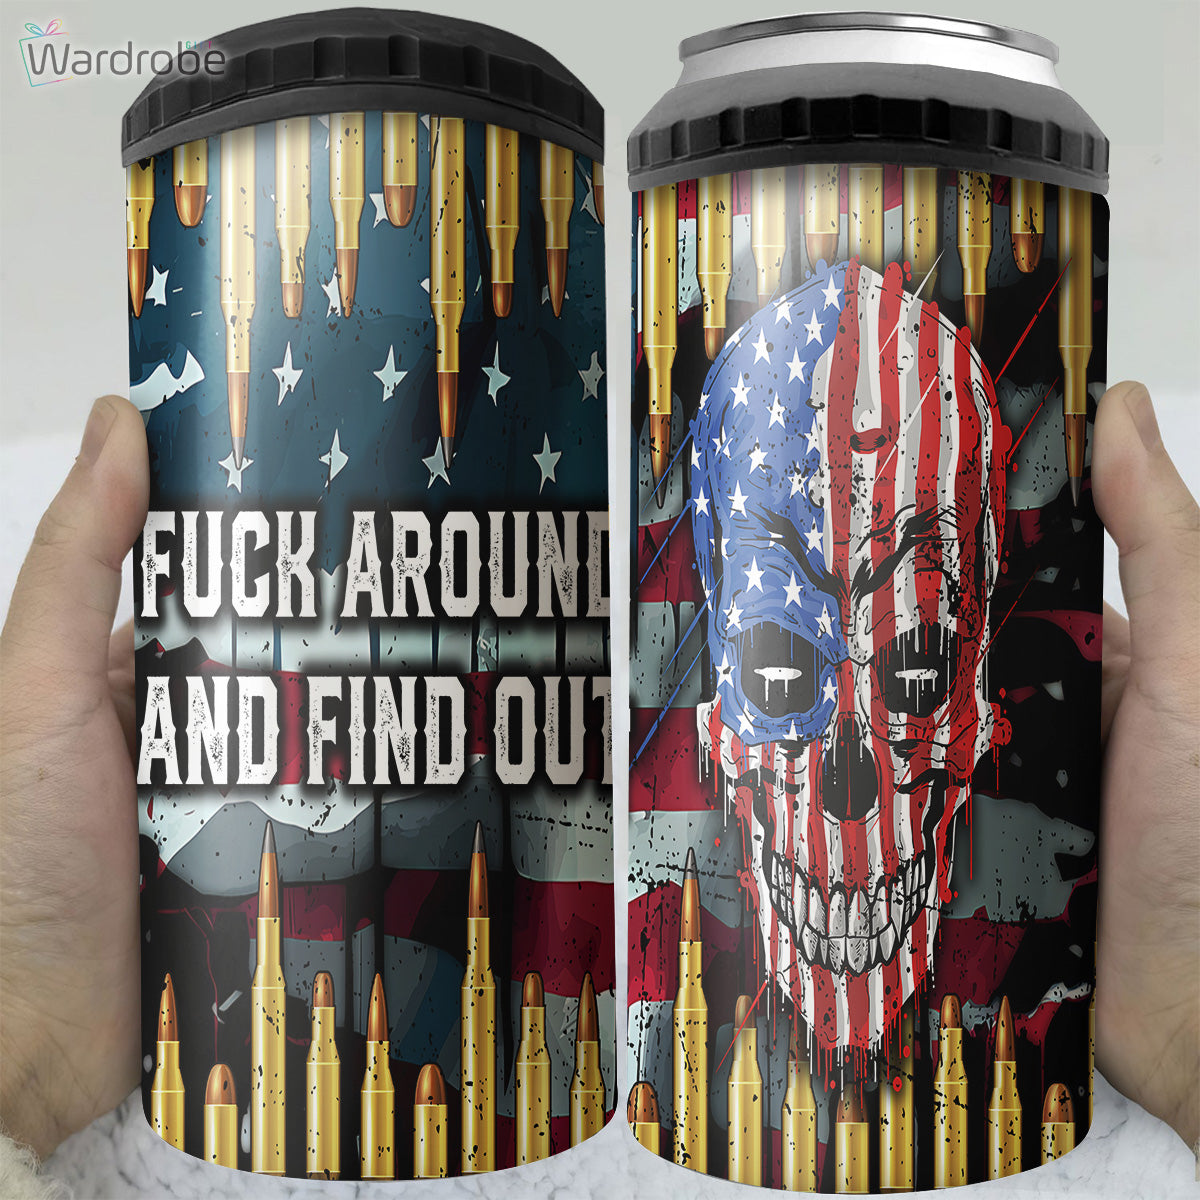 Find Out Skull American Flag Tumbler 4 in 1 Can Cooler 16Oz Tumbler Cup Bottle Cooler